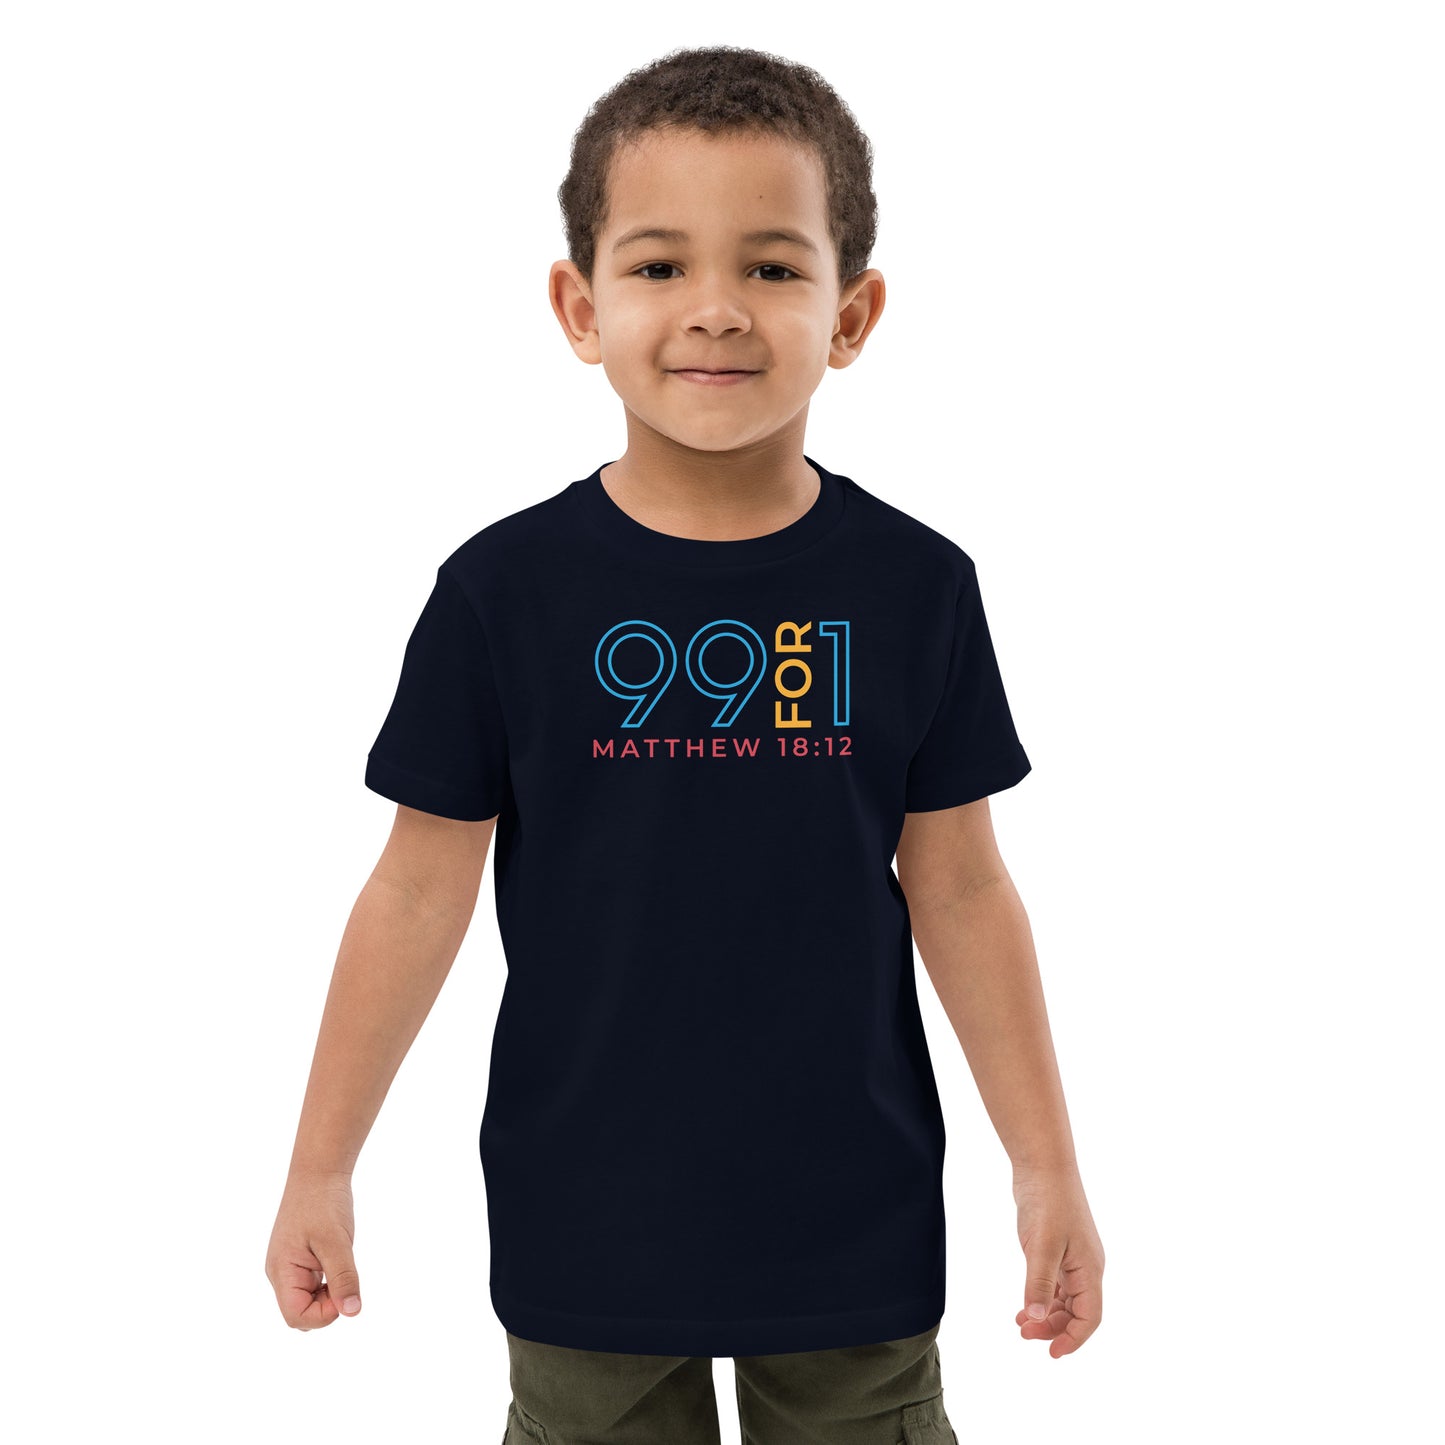 99 for1 kids t-shirt